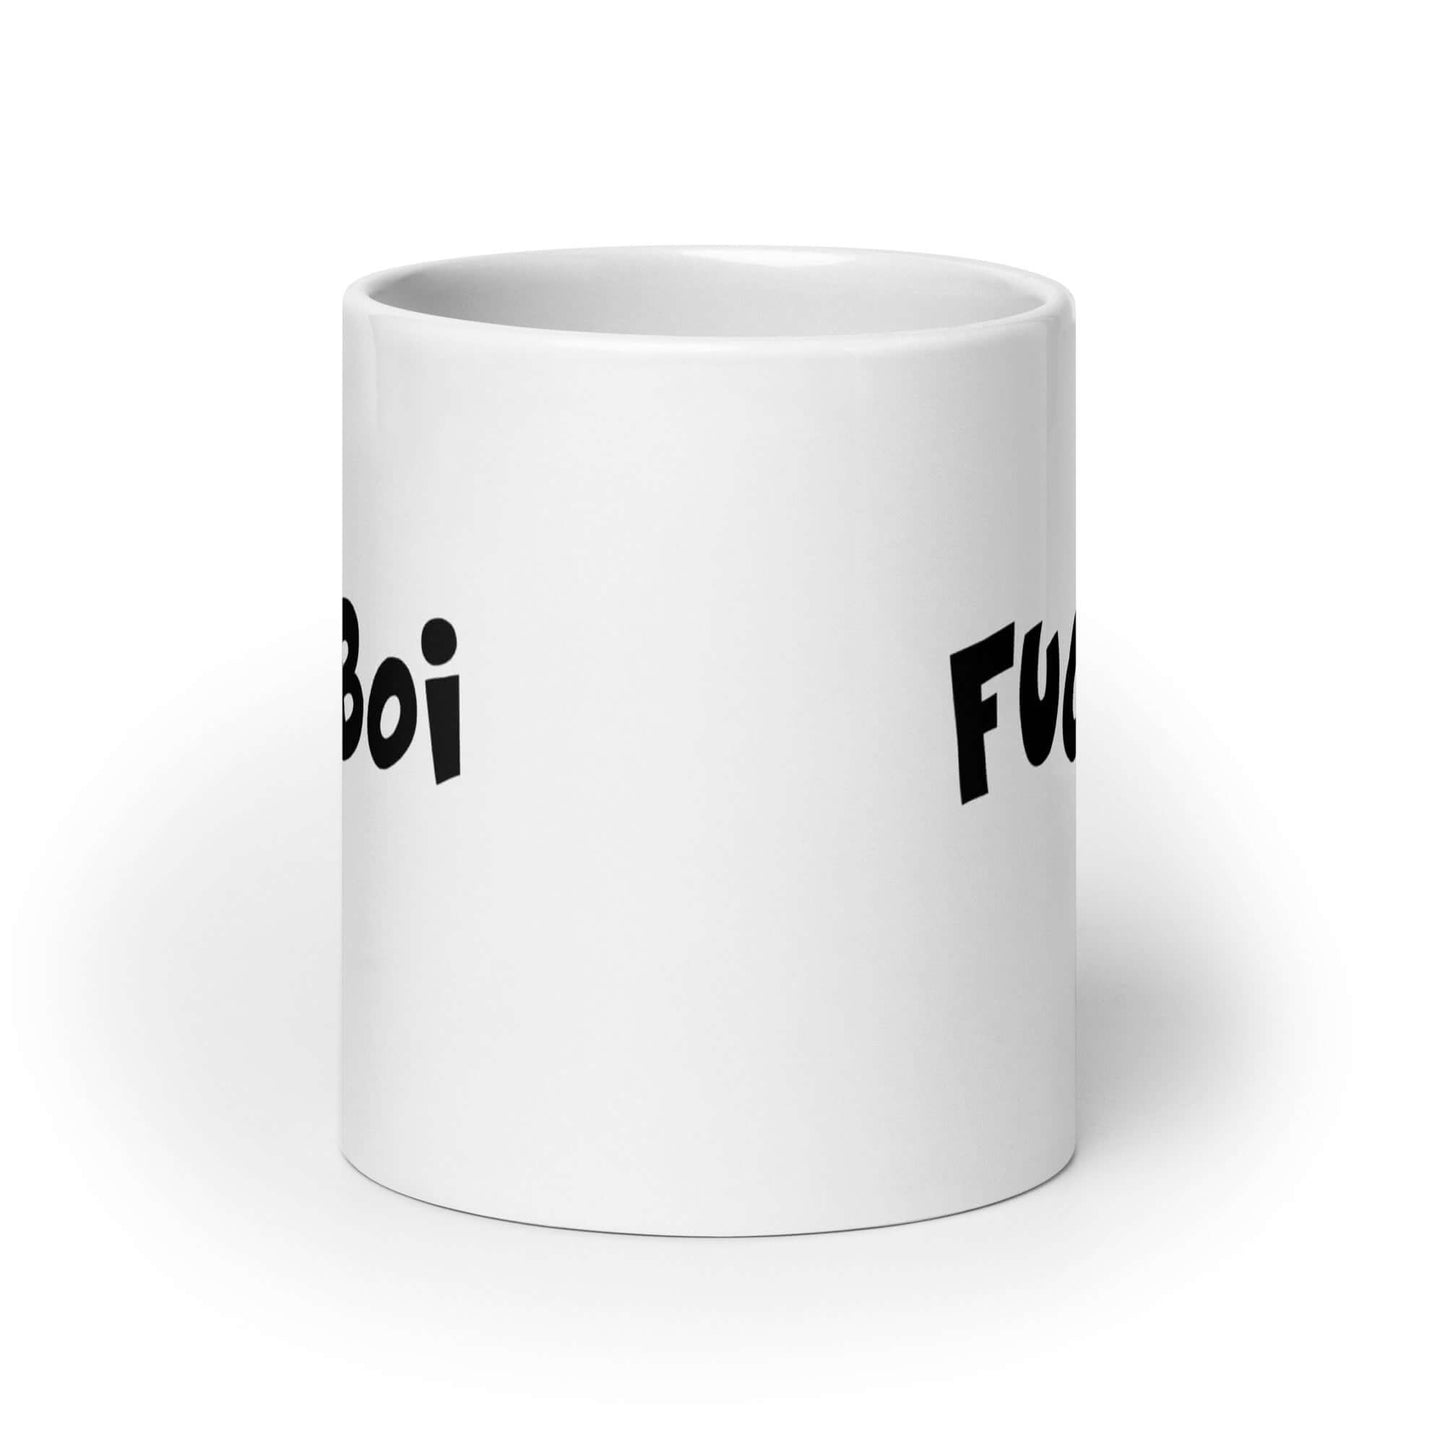 Fuckboi ceramic mug